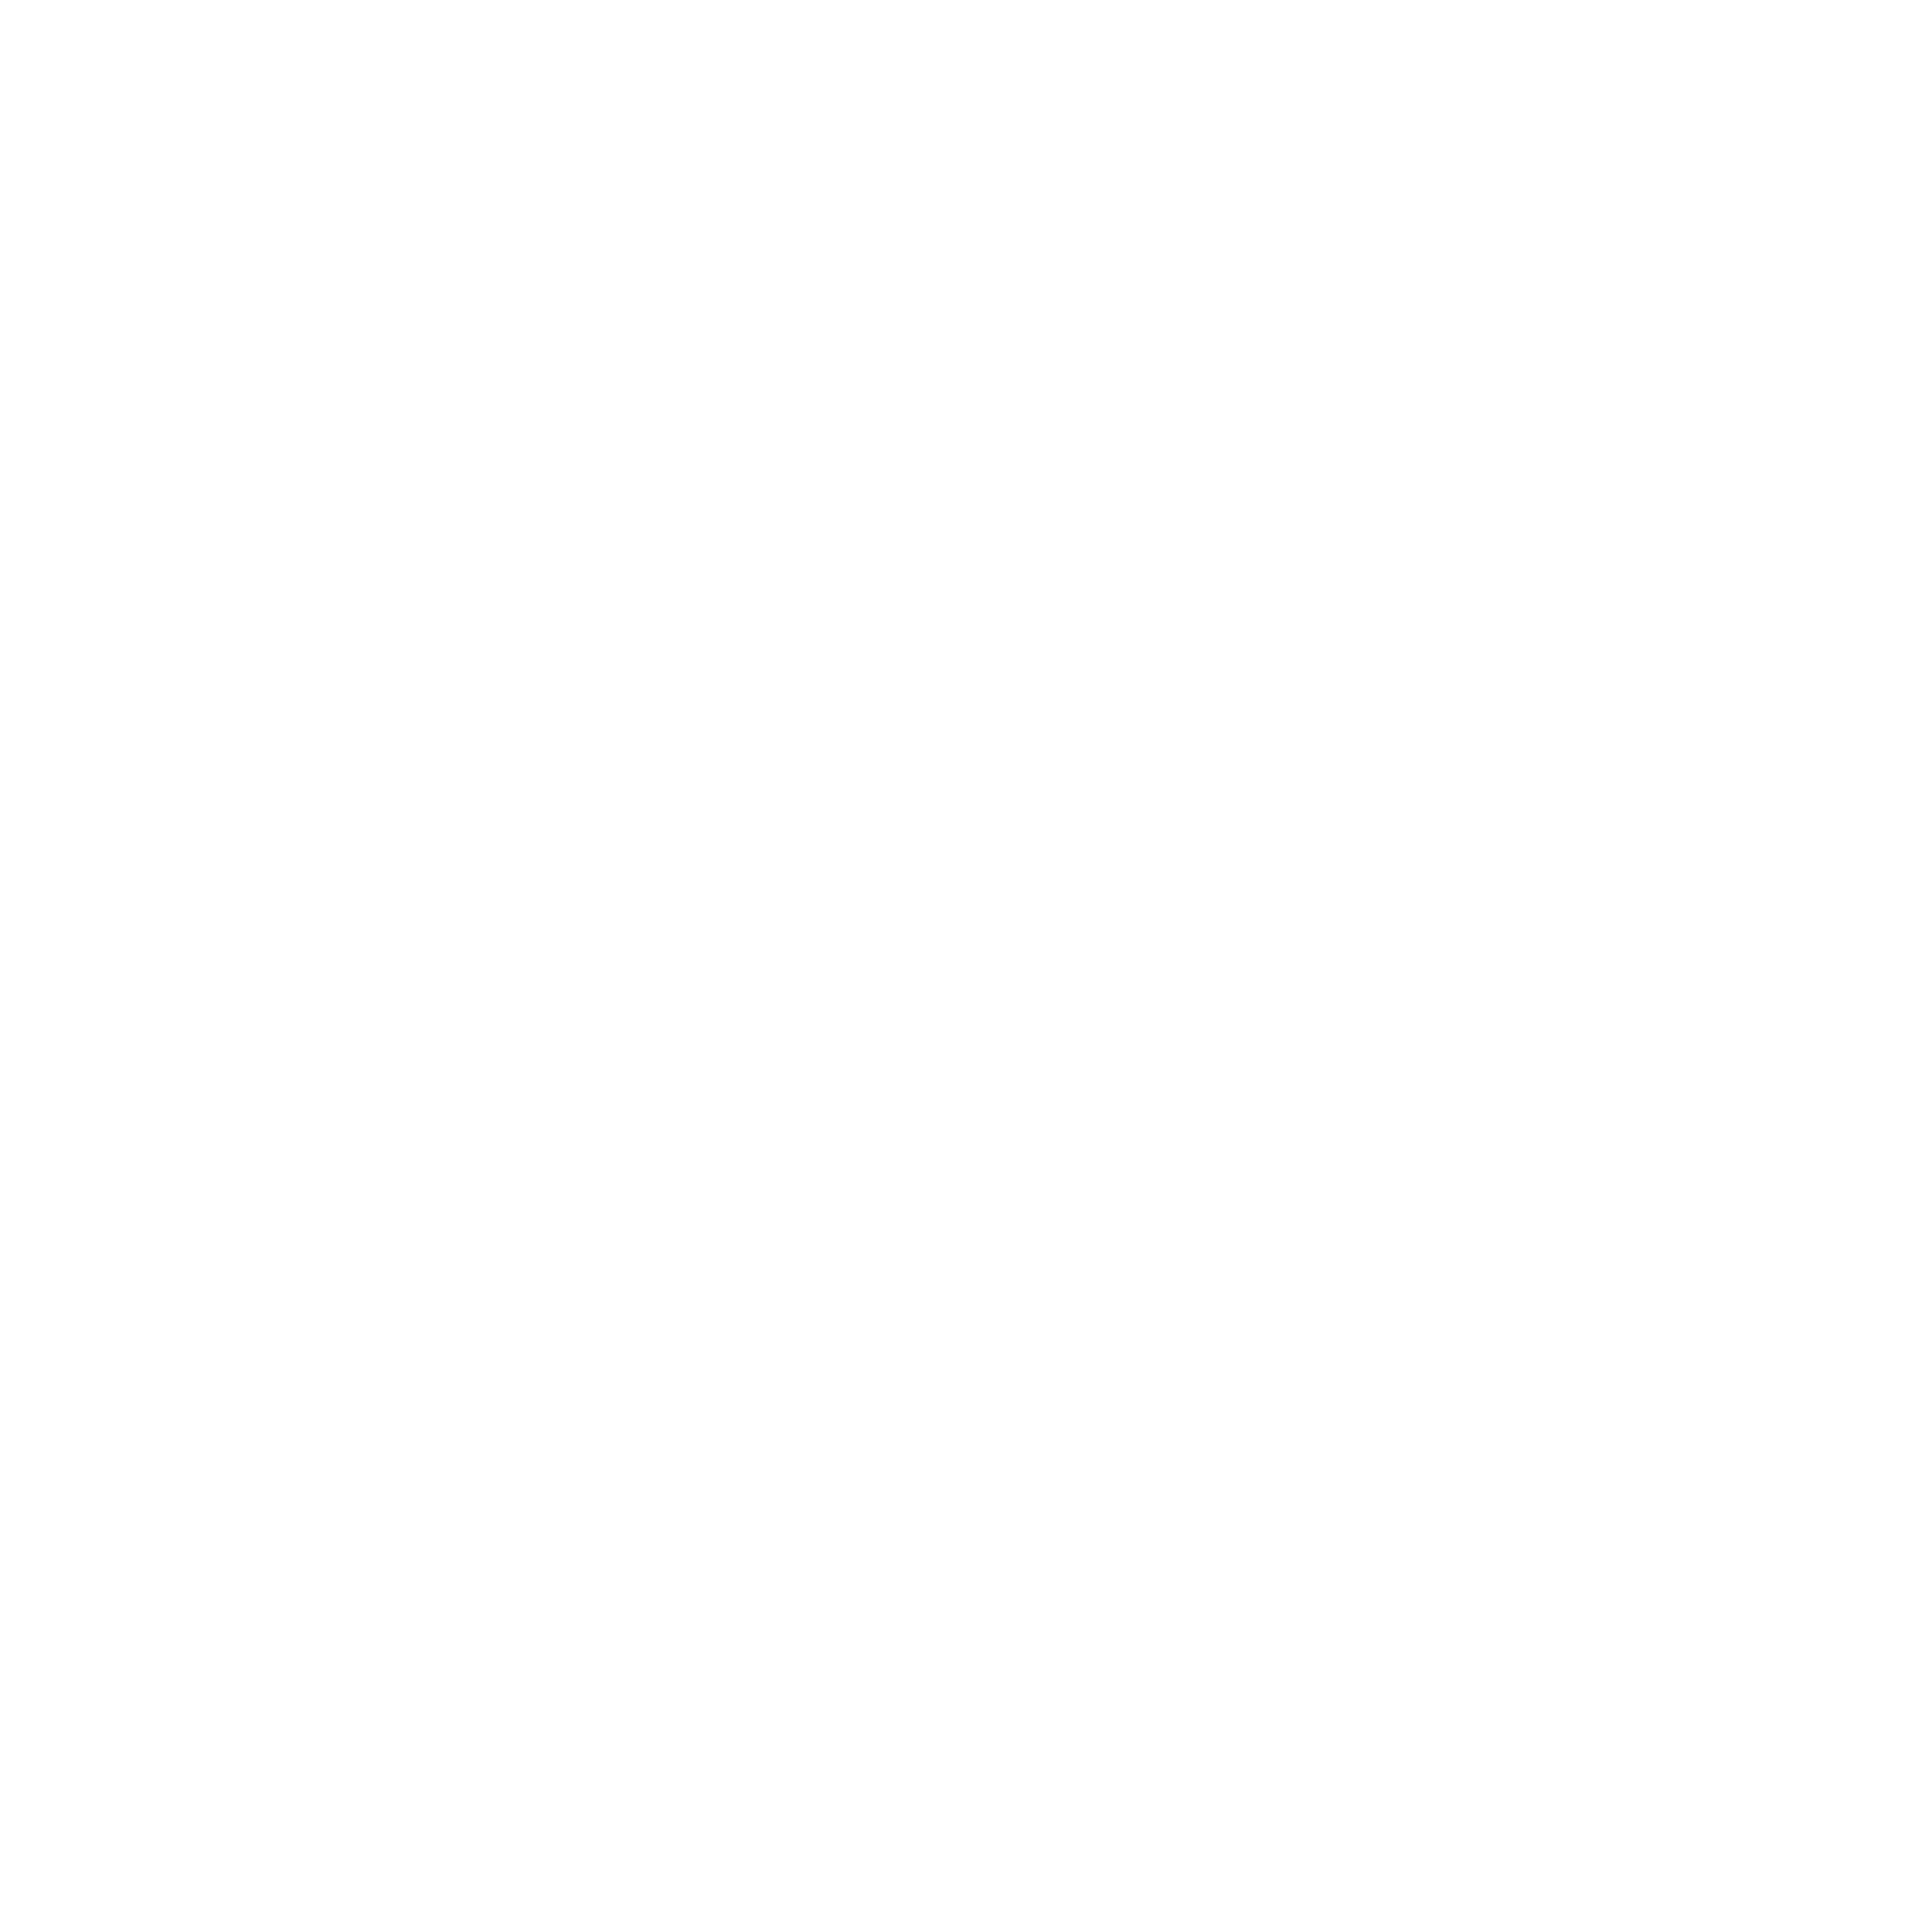 Lithonia Logo - Lithonia Lighting Logo PNG Transparent & SVG Vector